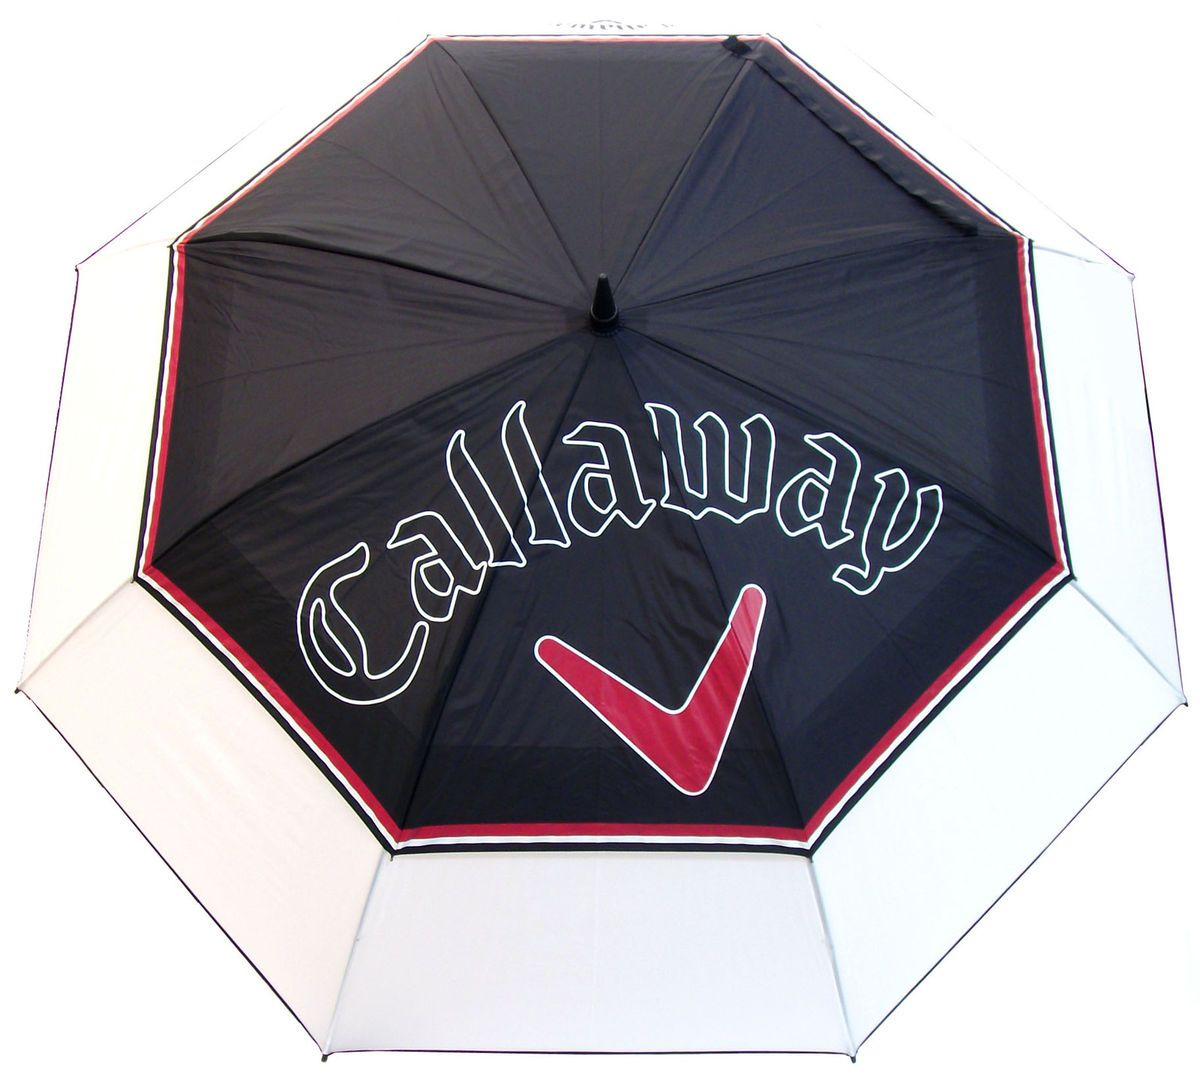 New 64 Callaway Double Canopy Auto Open Golf Umbrella Black White Red 